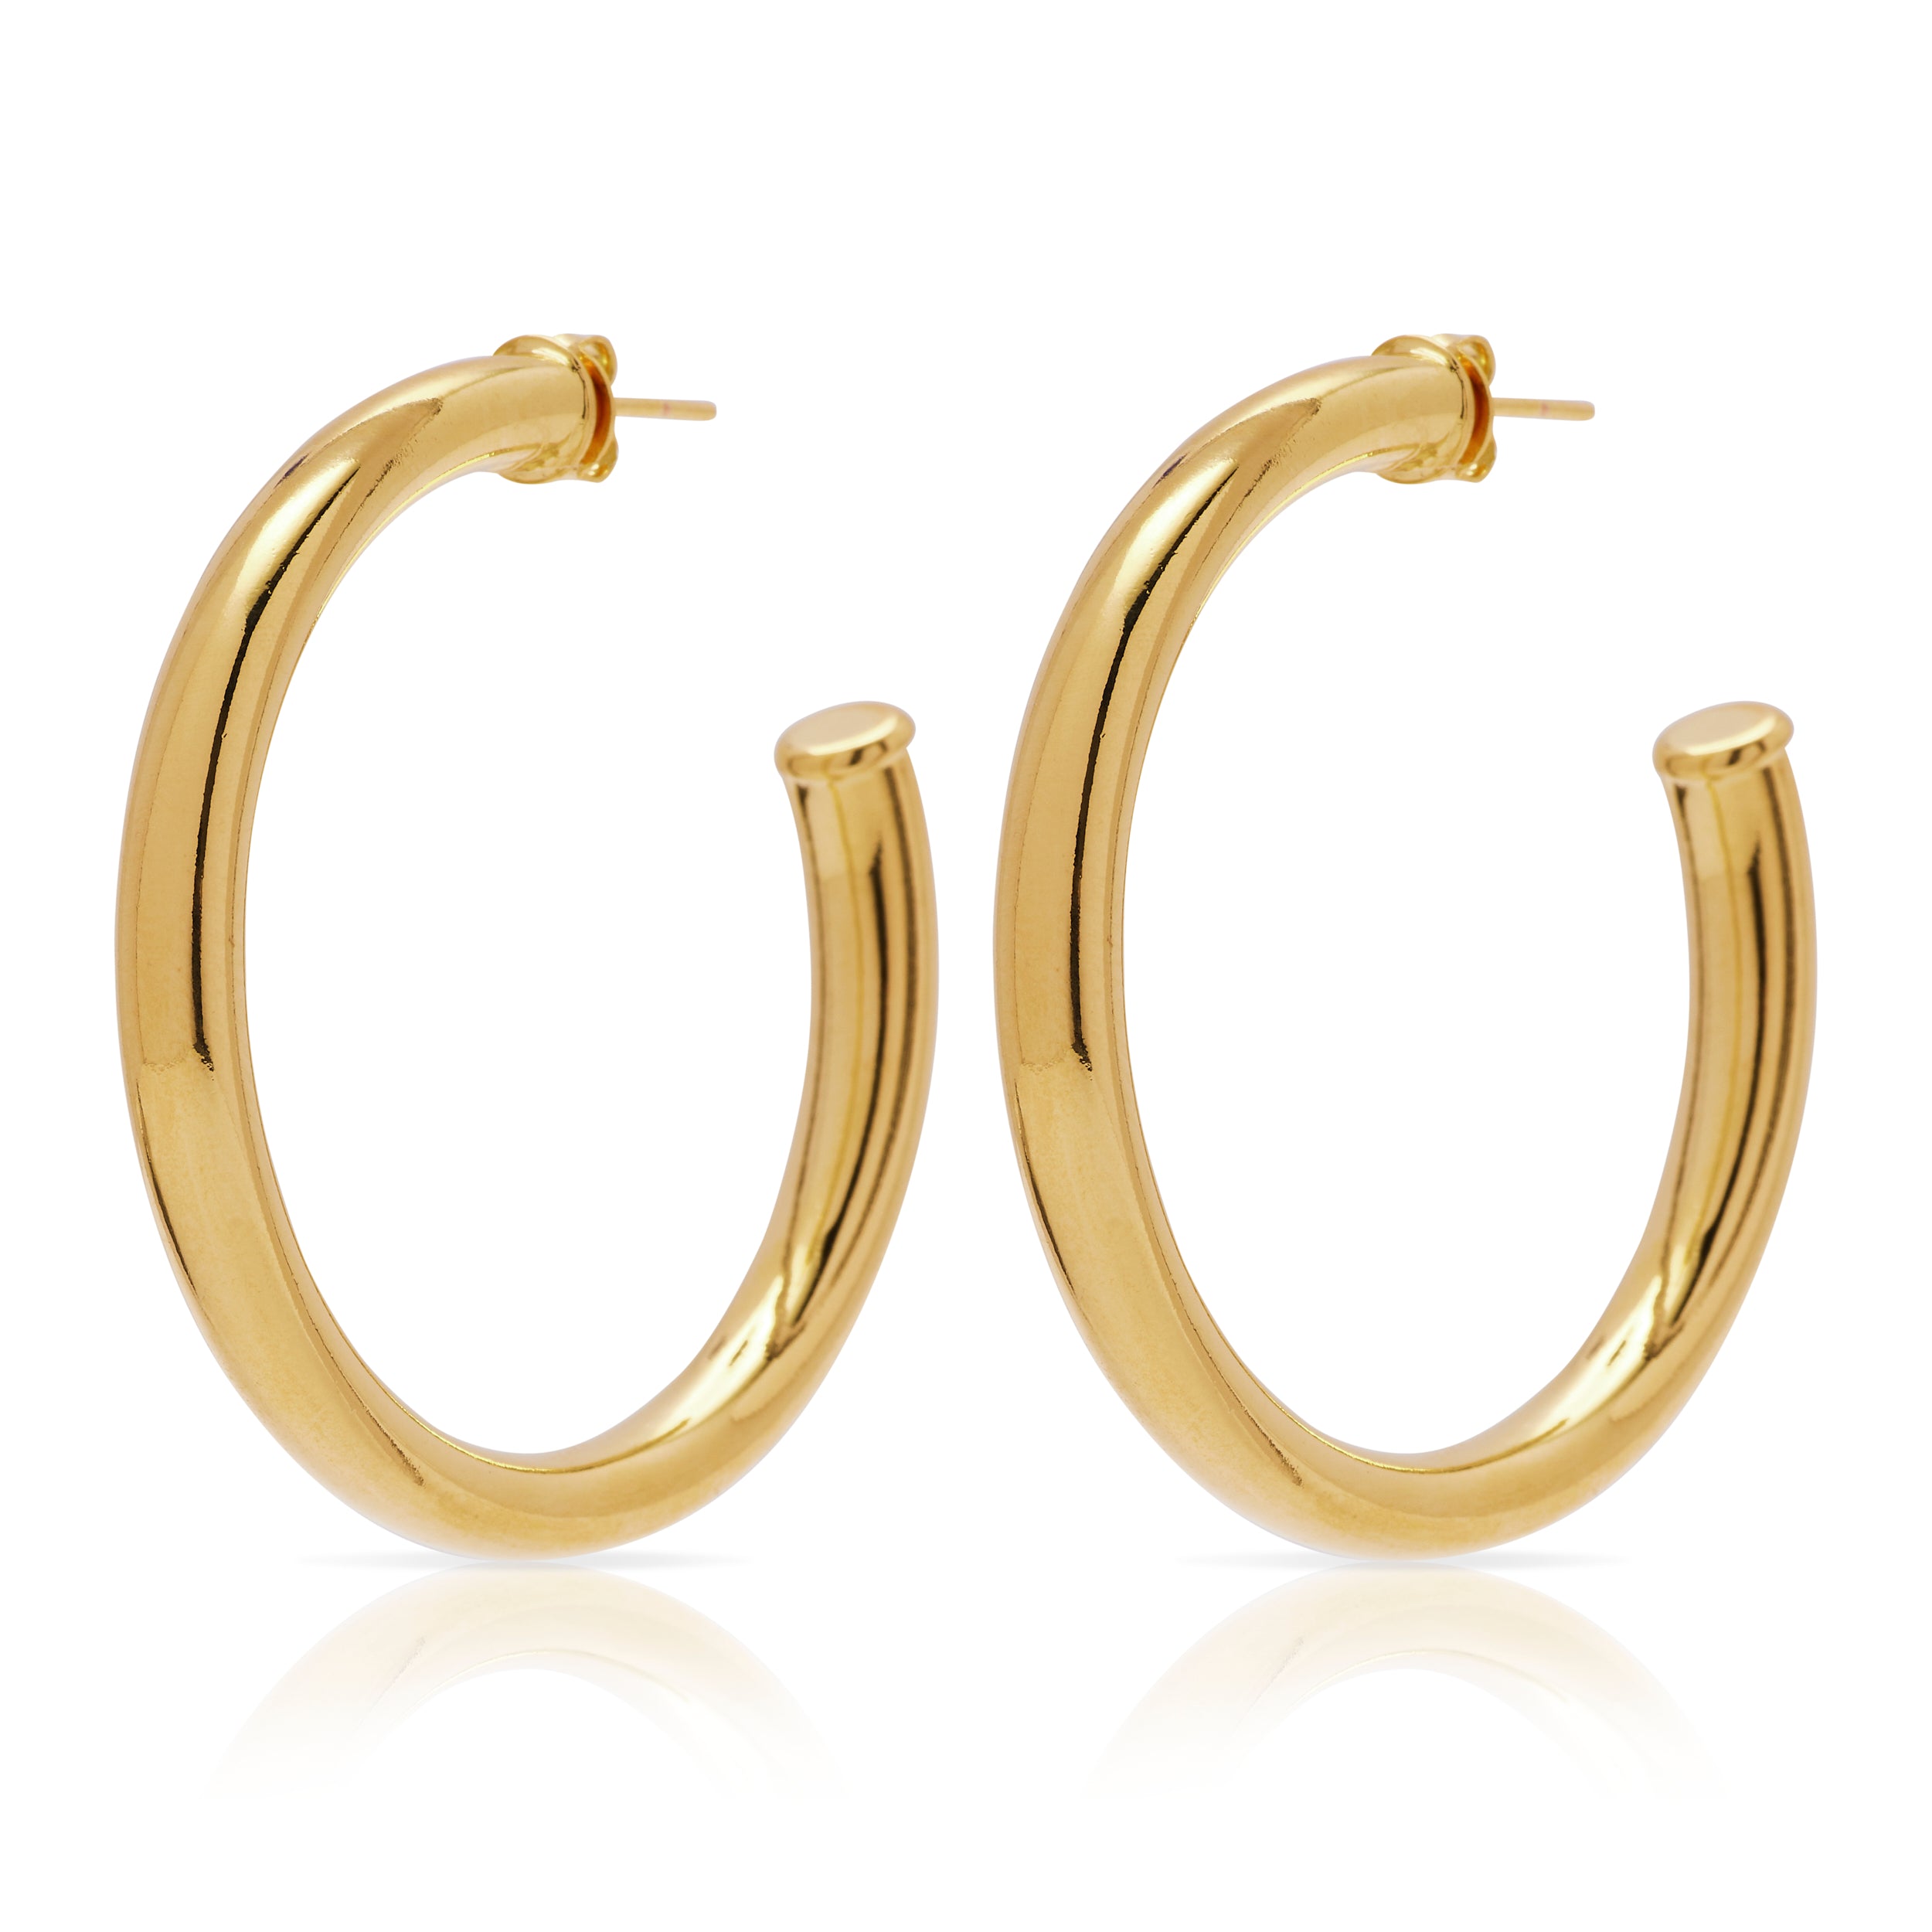 Rose Gold Hoops Earrings w/ Copper Beads, Size Medium - Carmen Q